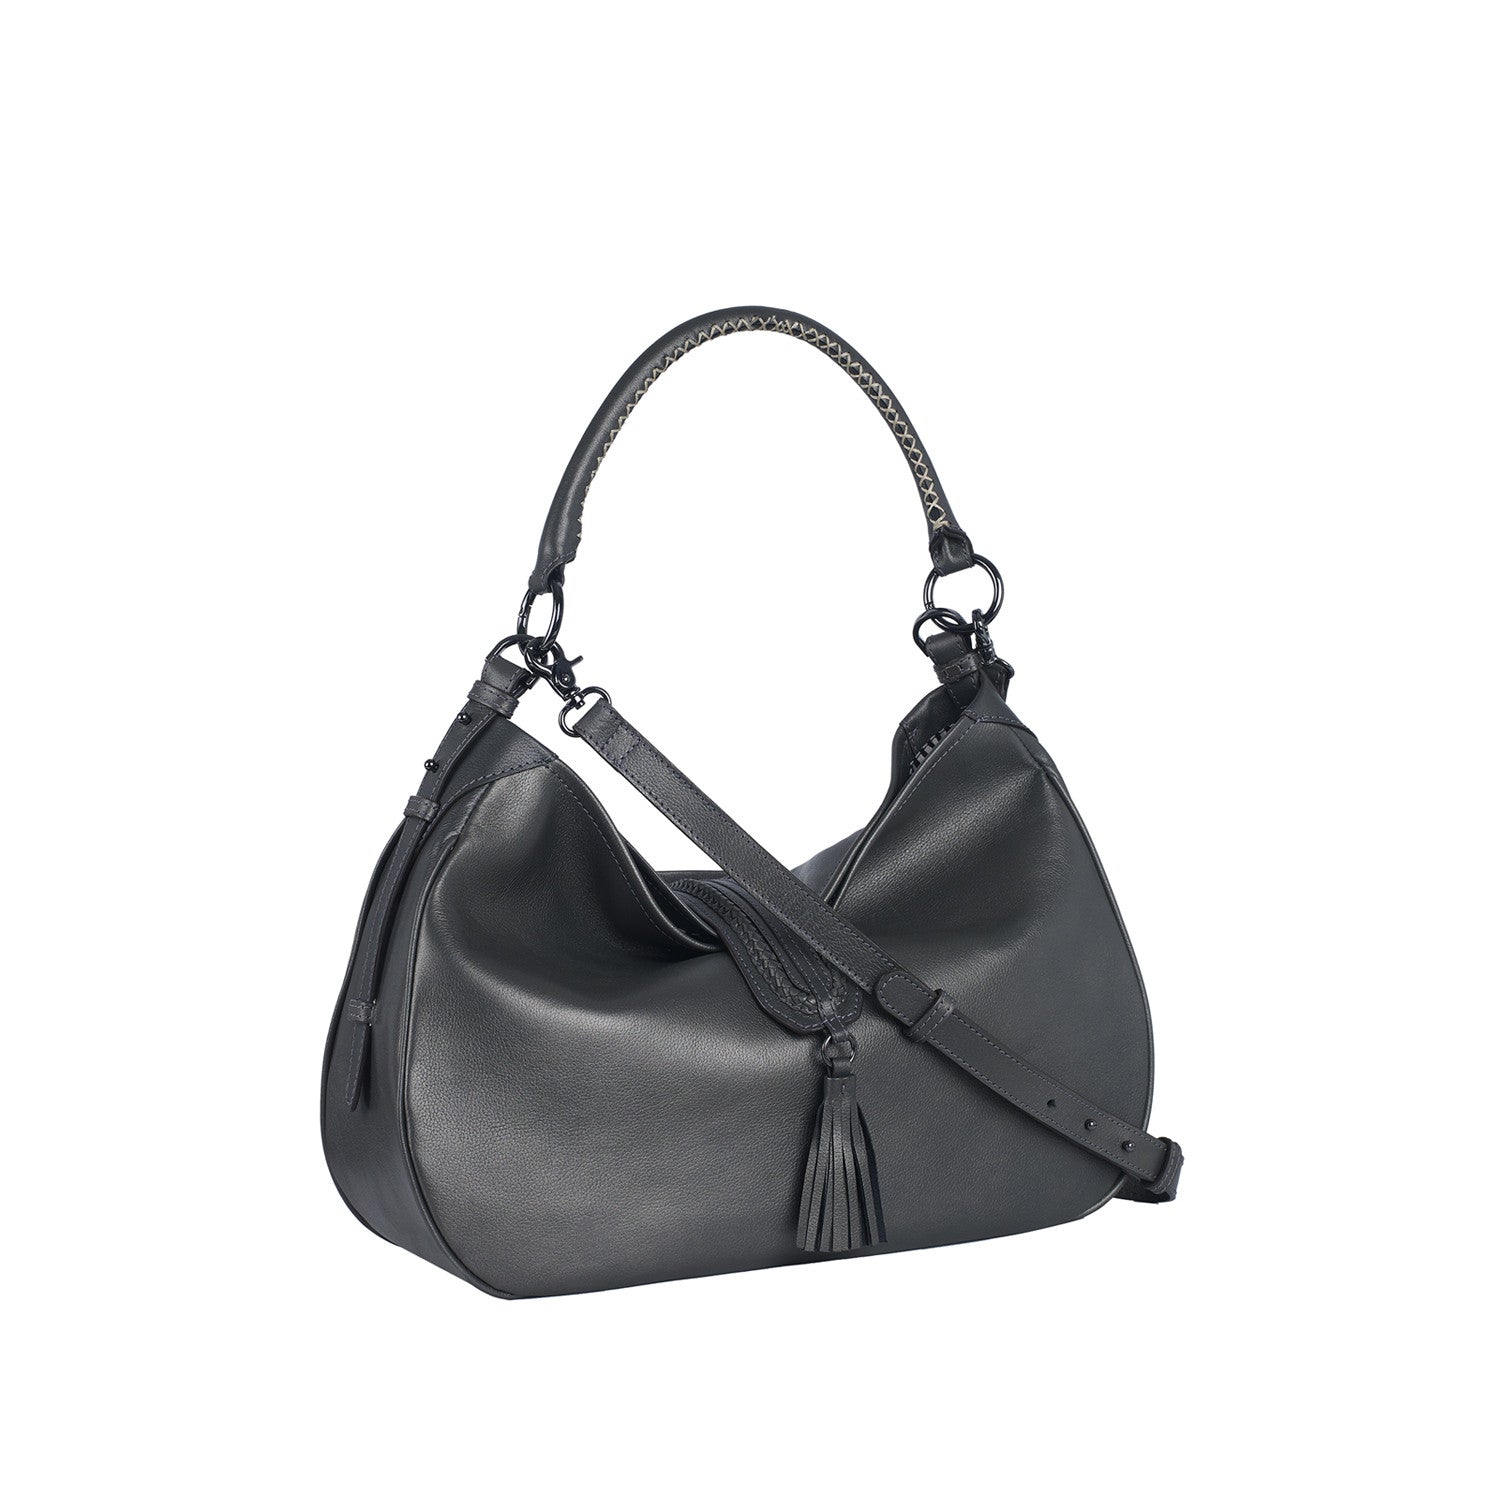 Metallic patent-leather handbag